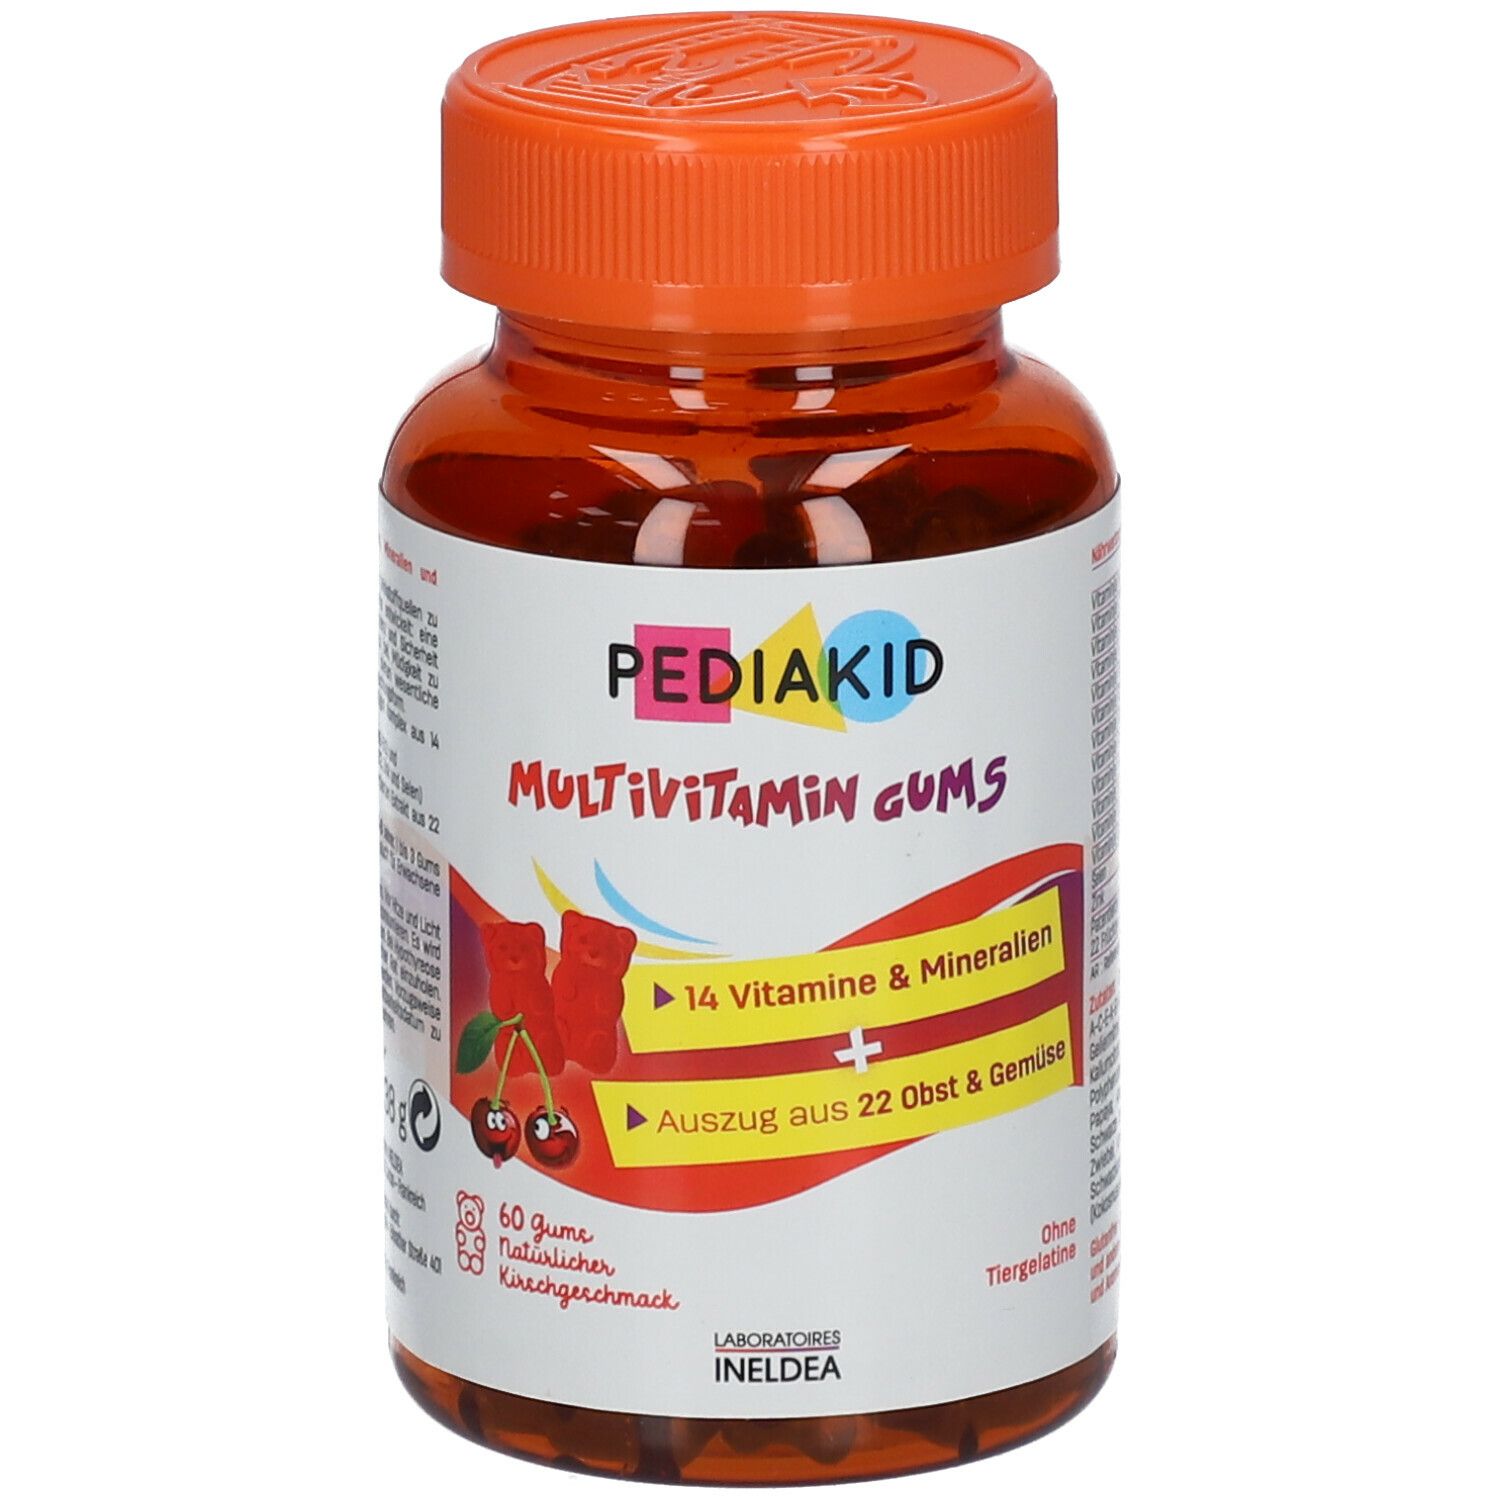 PEDIAKID® Multivitamin-Gums